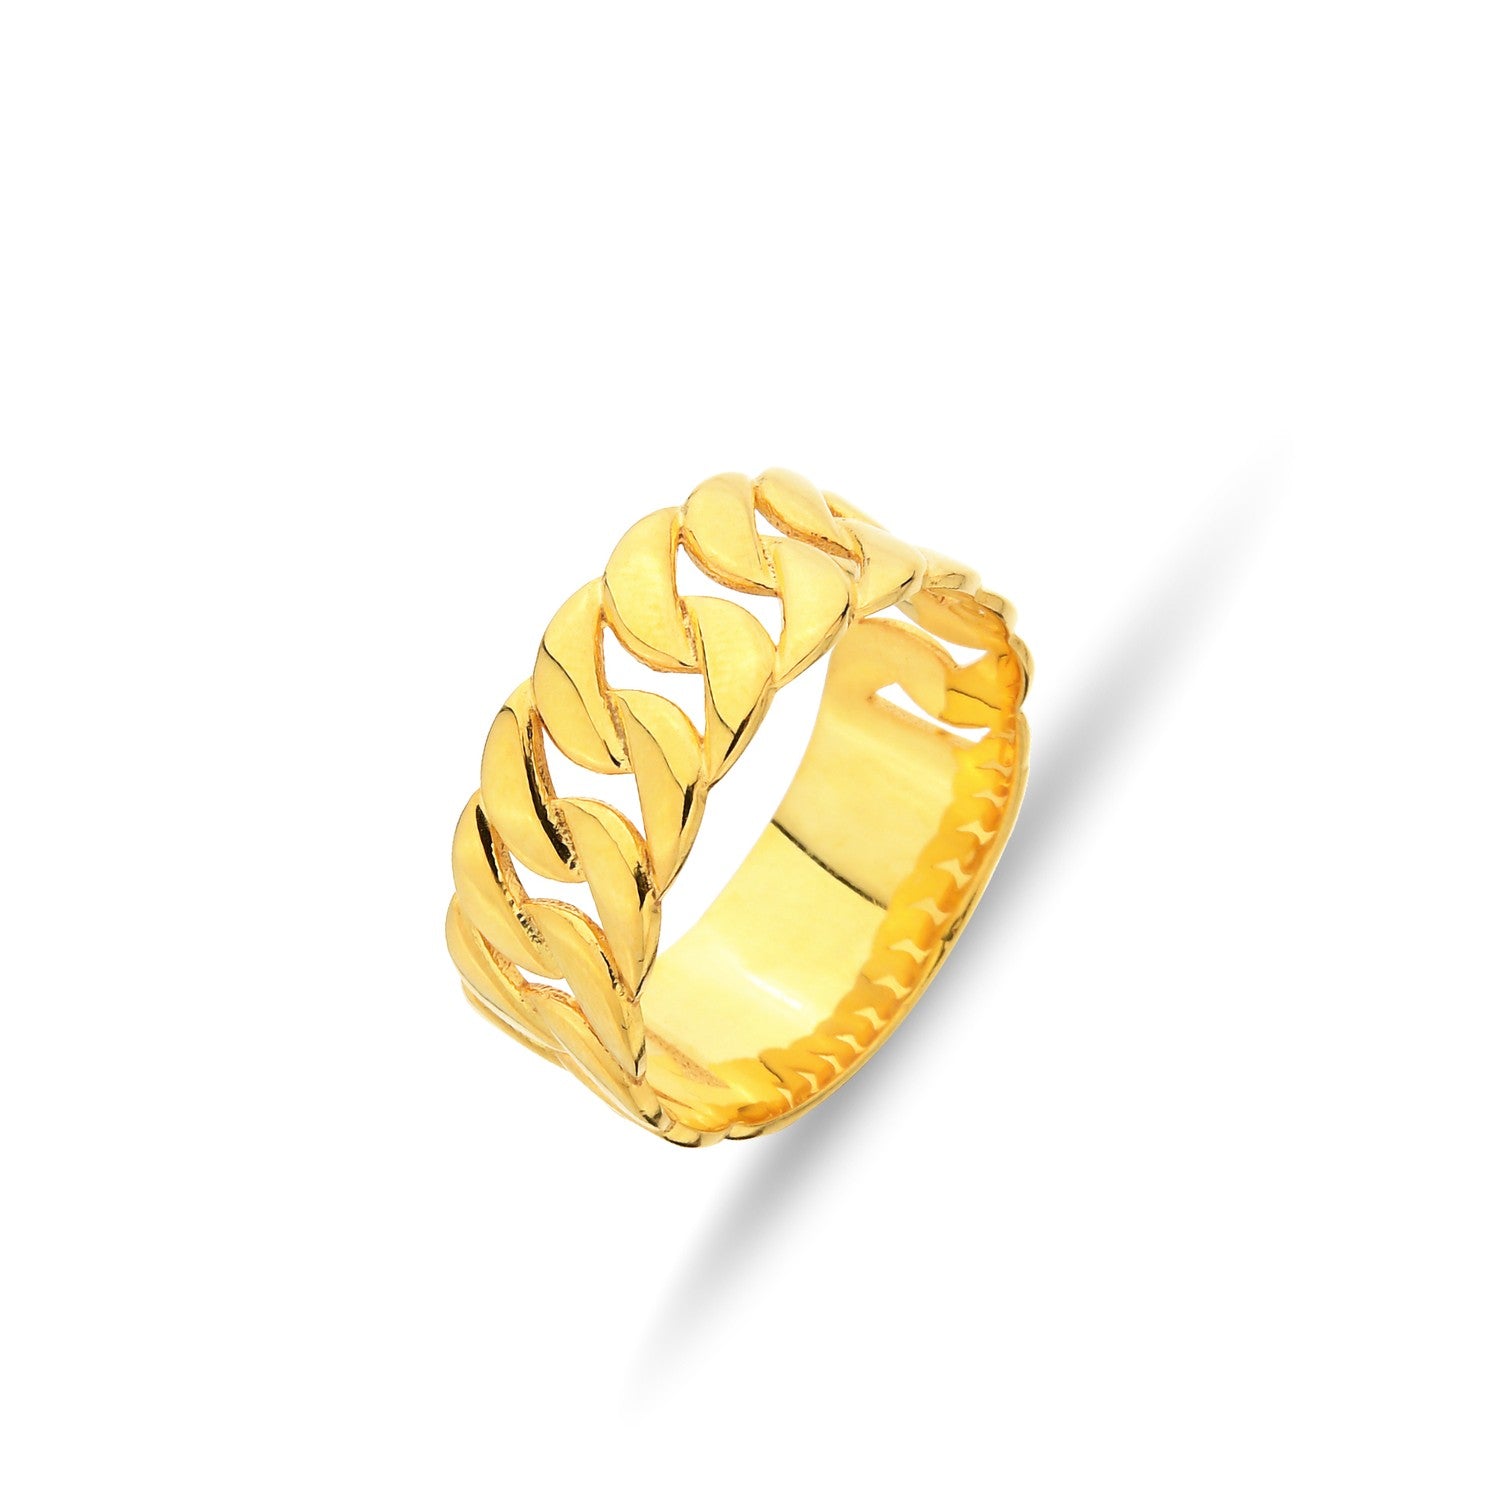 cuban chain ring with diamonds